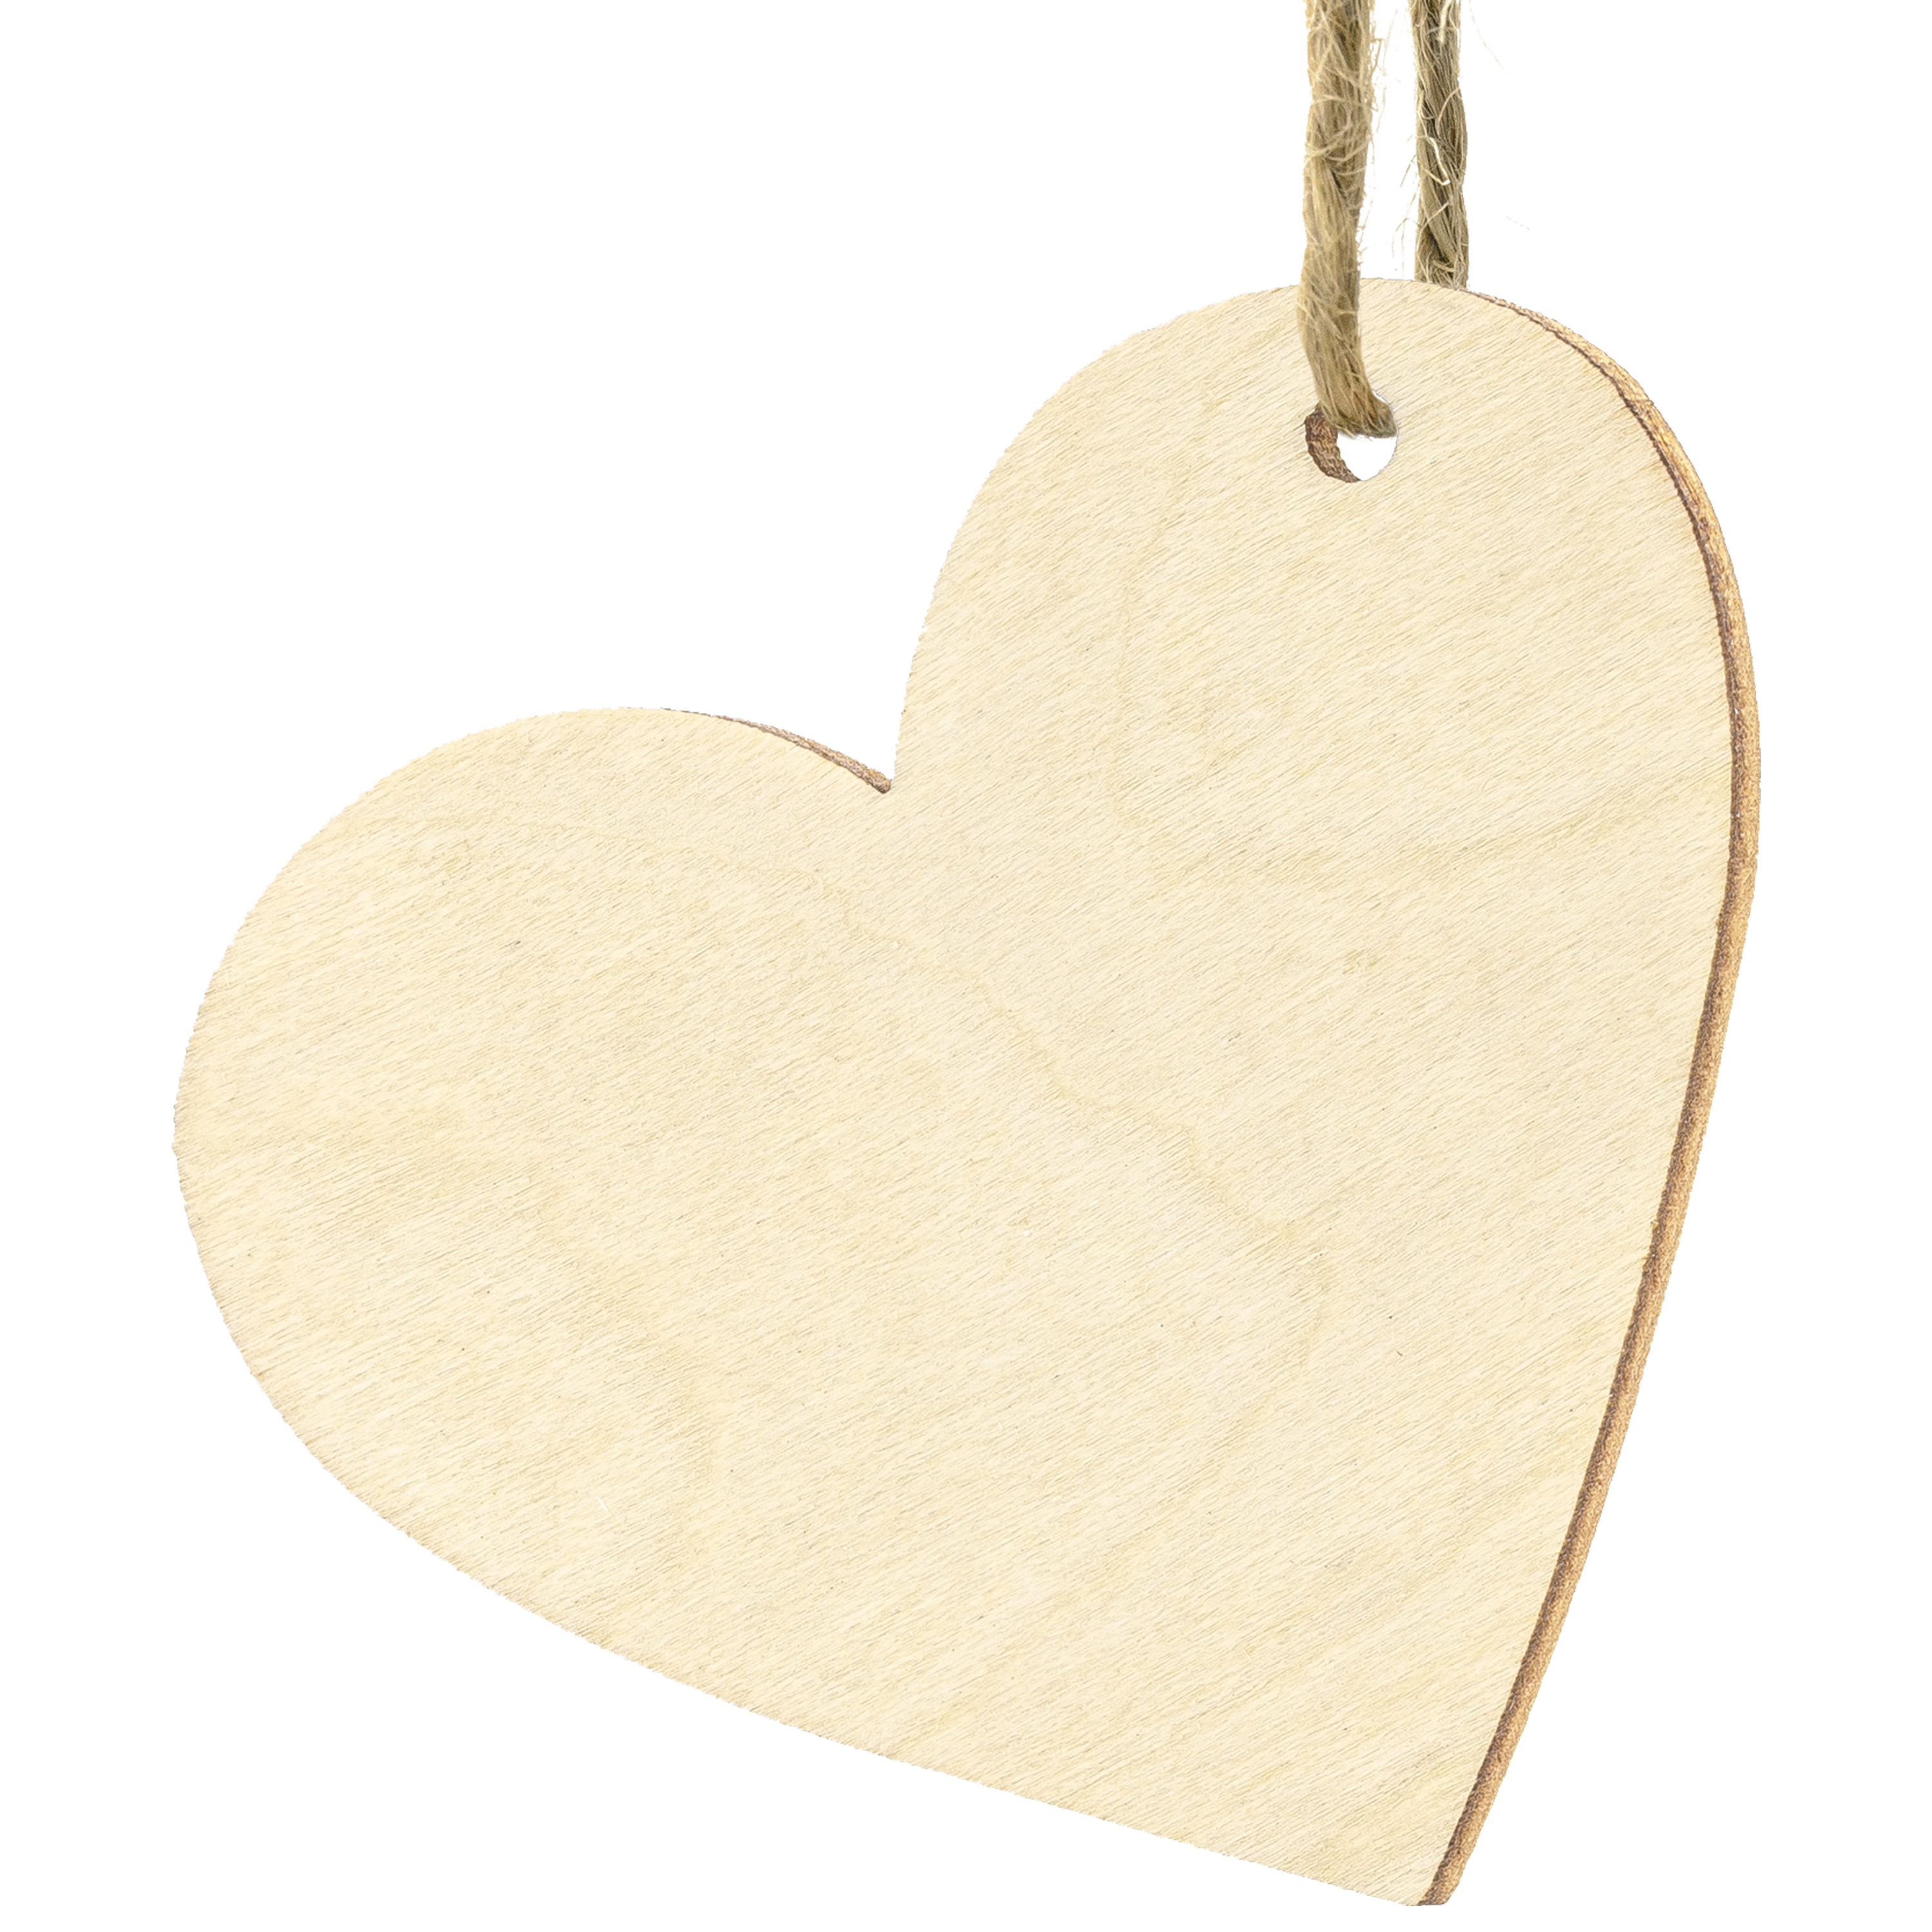 Cadeaulabels houten hartje set 10x stuks bruin 6 x 5 cm naam tags